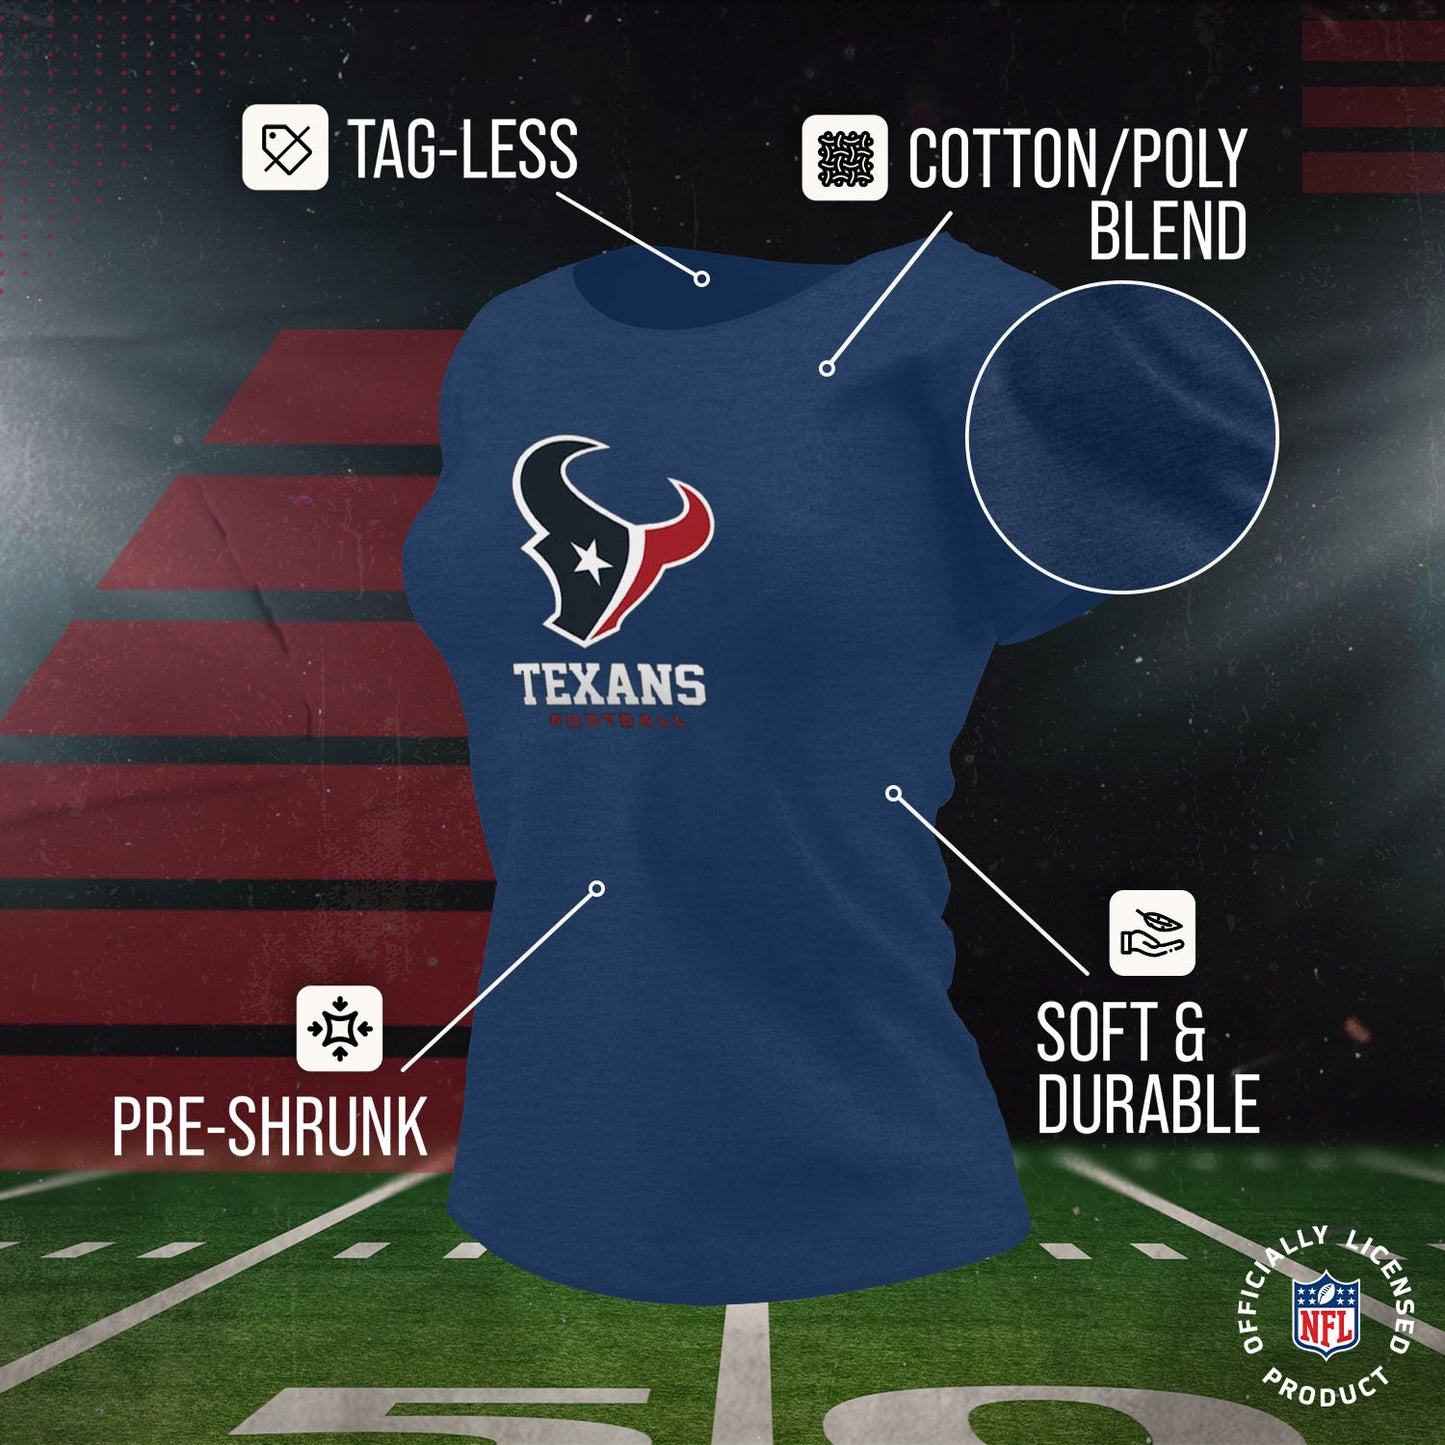 Houston Texans Women's NFL Ultimate Fan Logo Short Sleeve T-Shirt - Navy